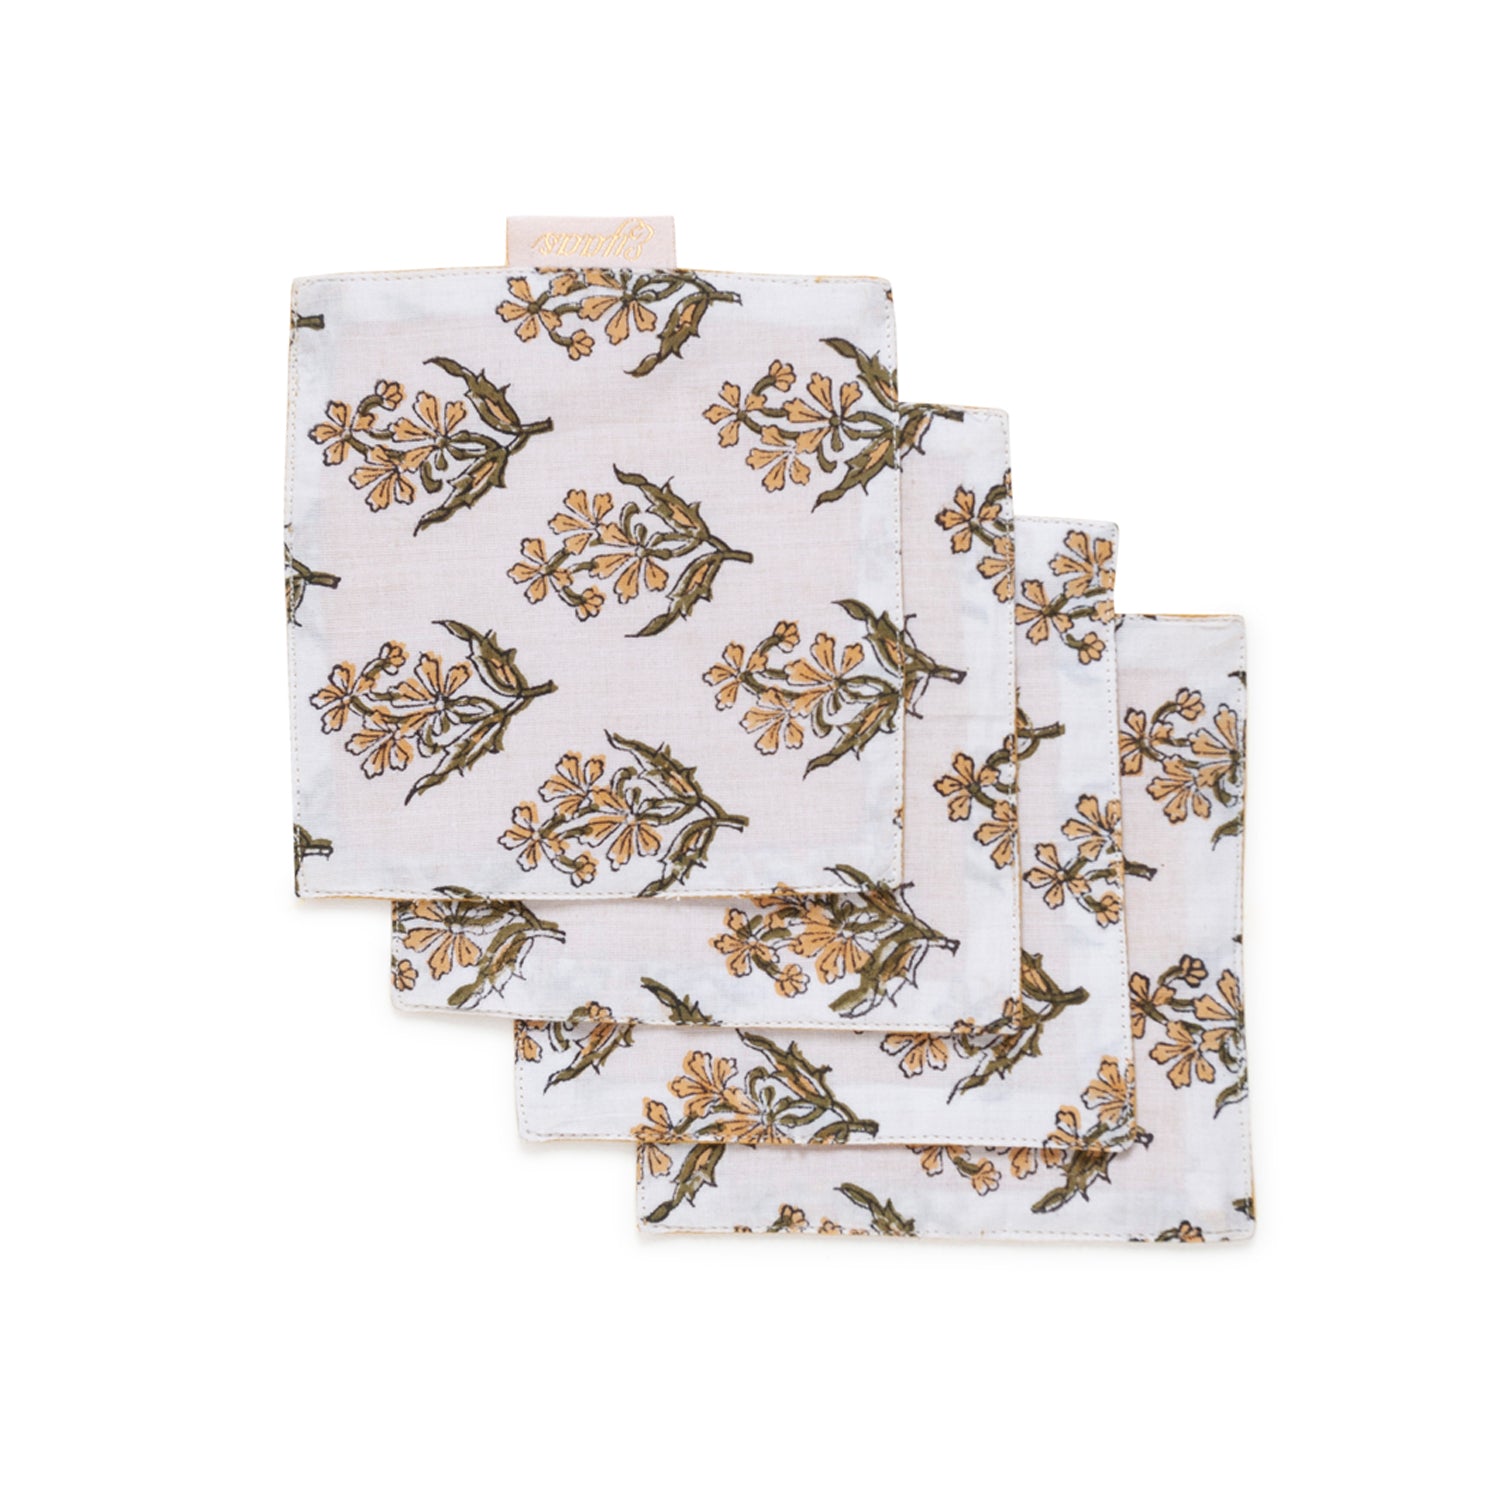 Fabric Coasters - 4x4" - Set of 4